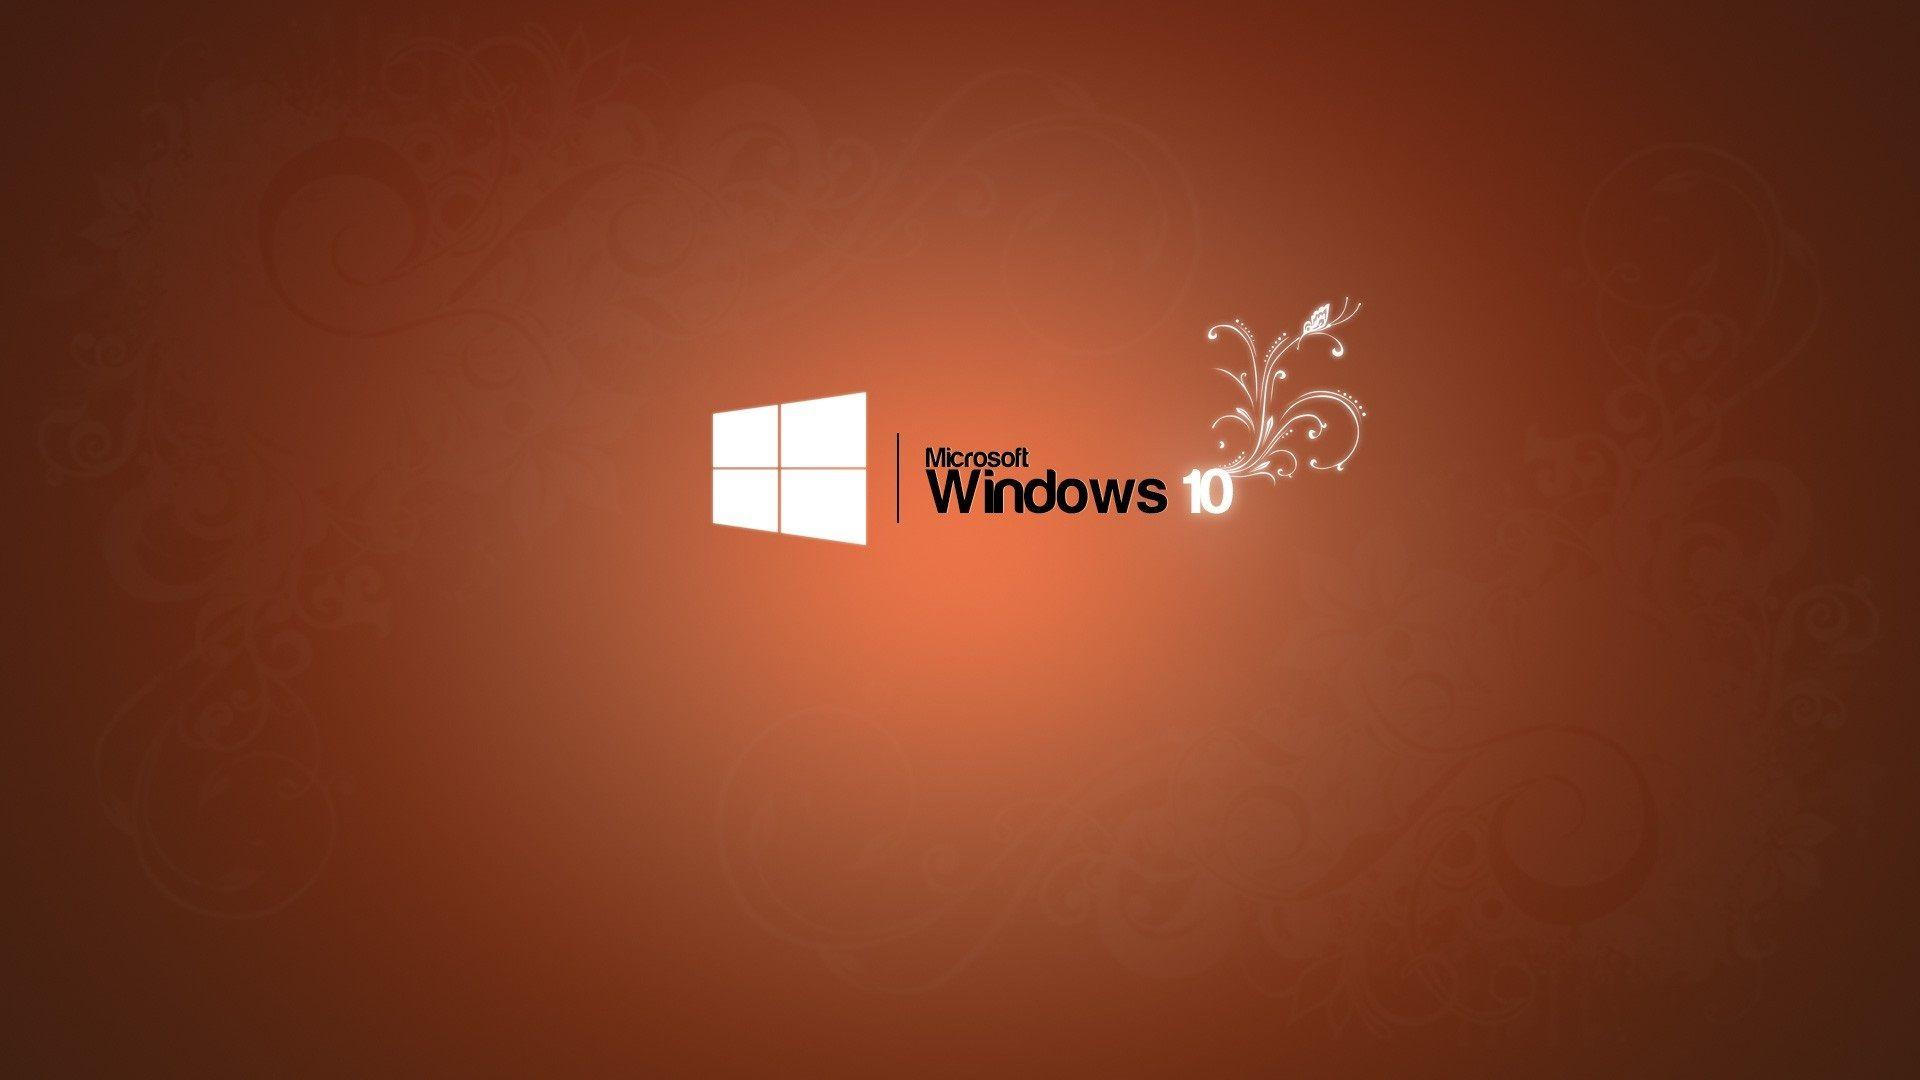 Microsoft Windows 10 logo, orange backgrounds wallpapers